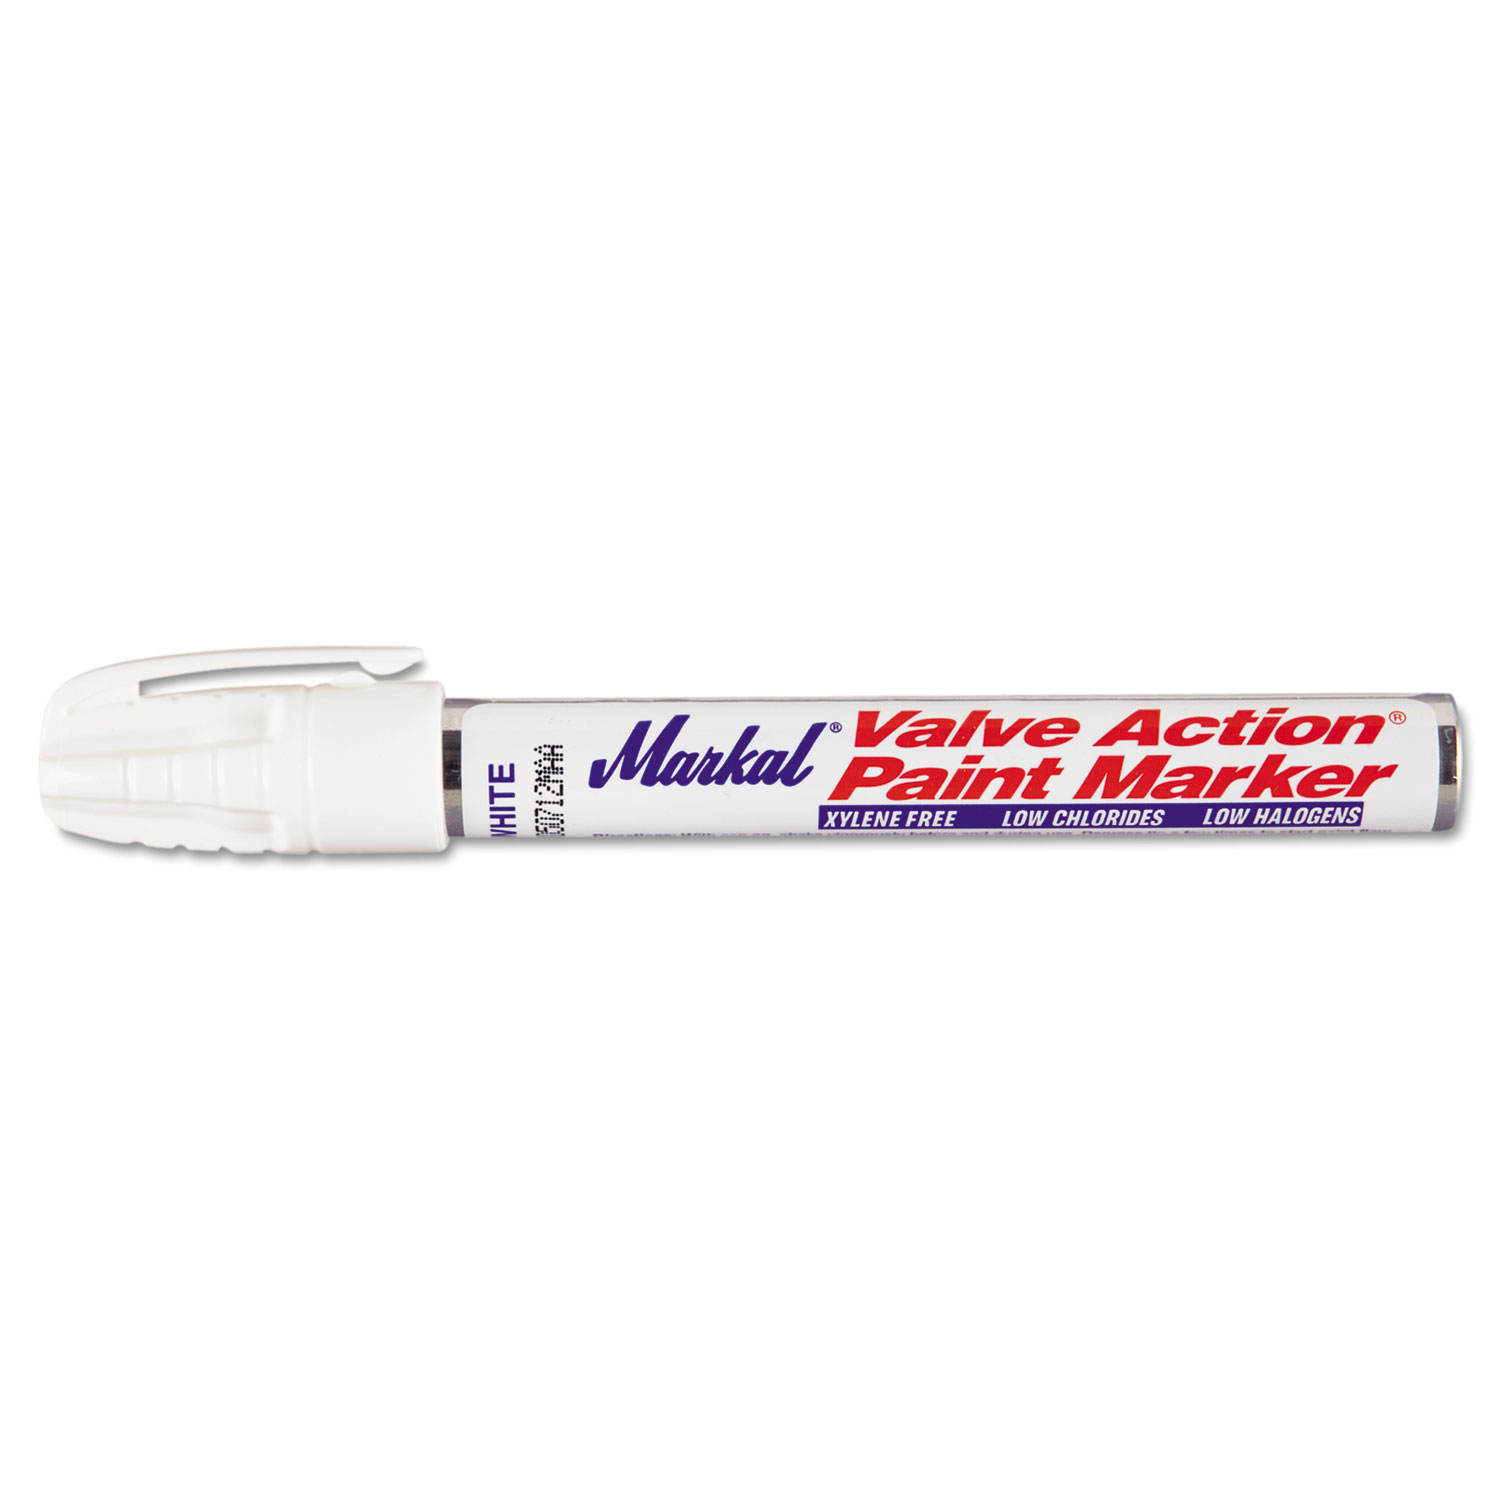 Valve Action Paint Marker, White